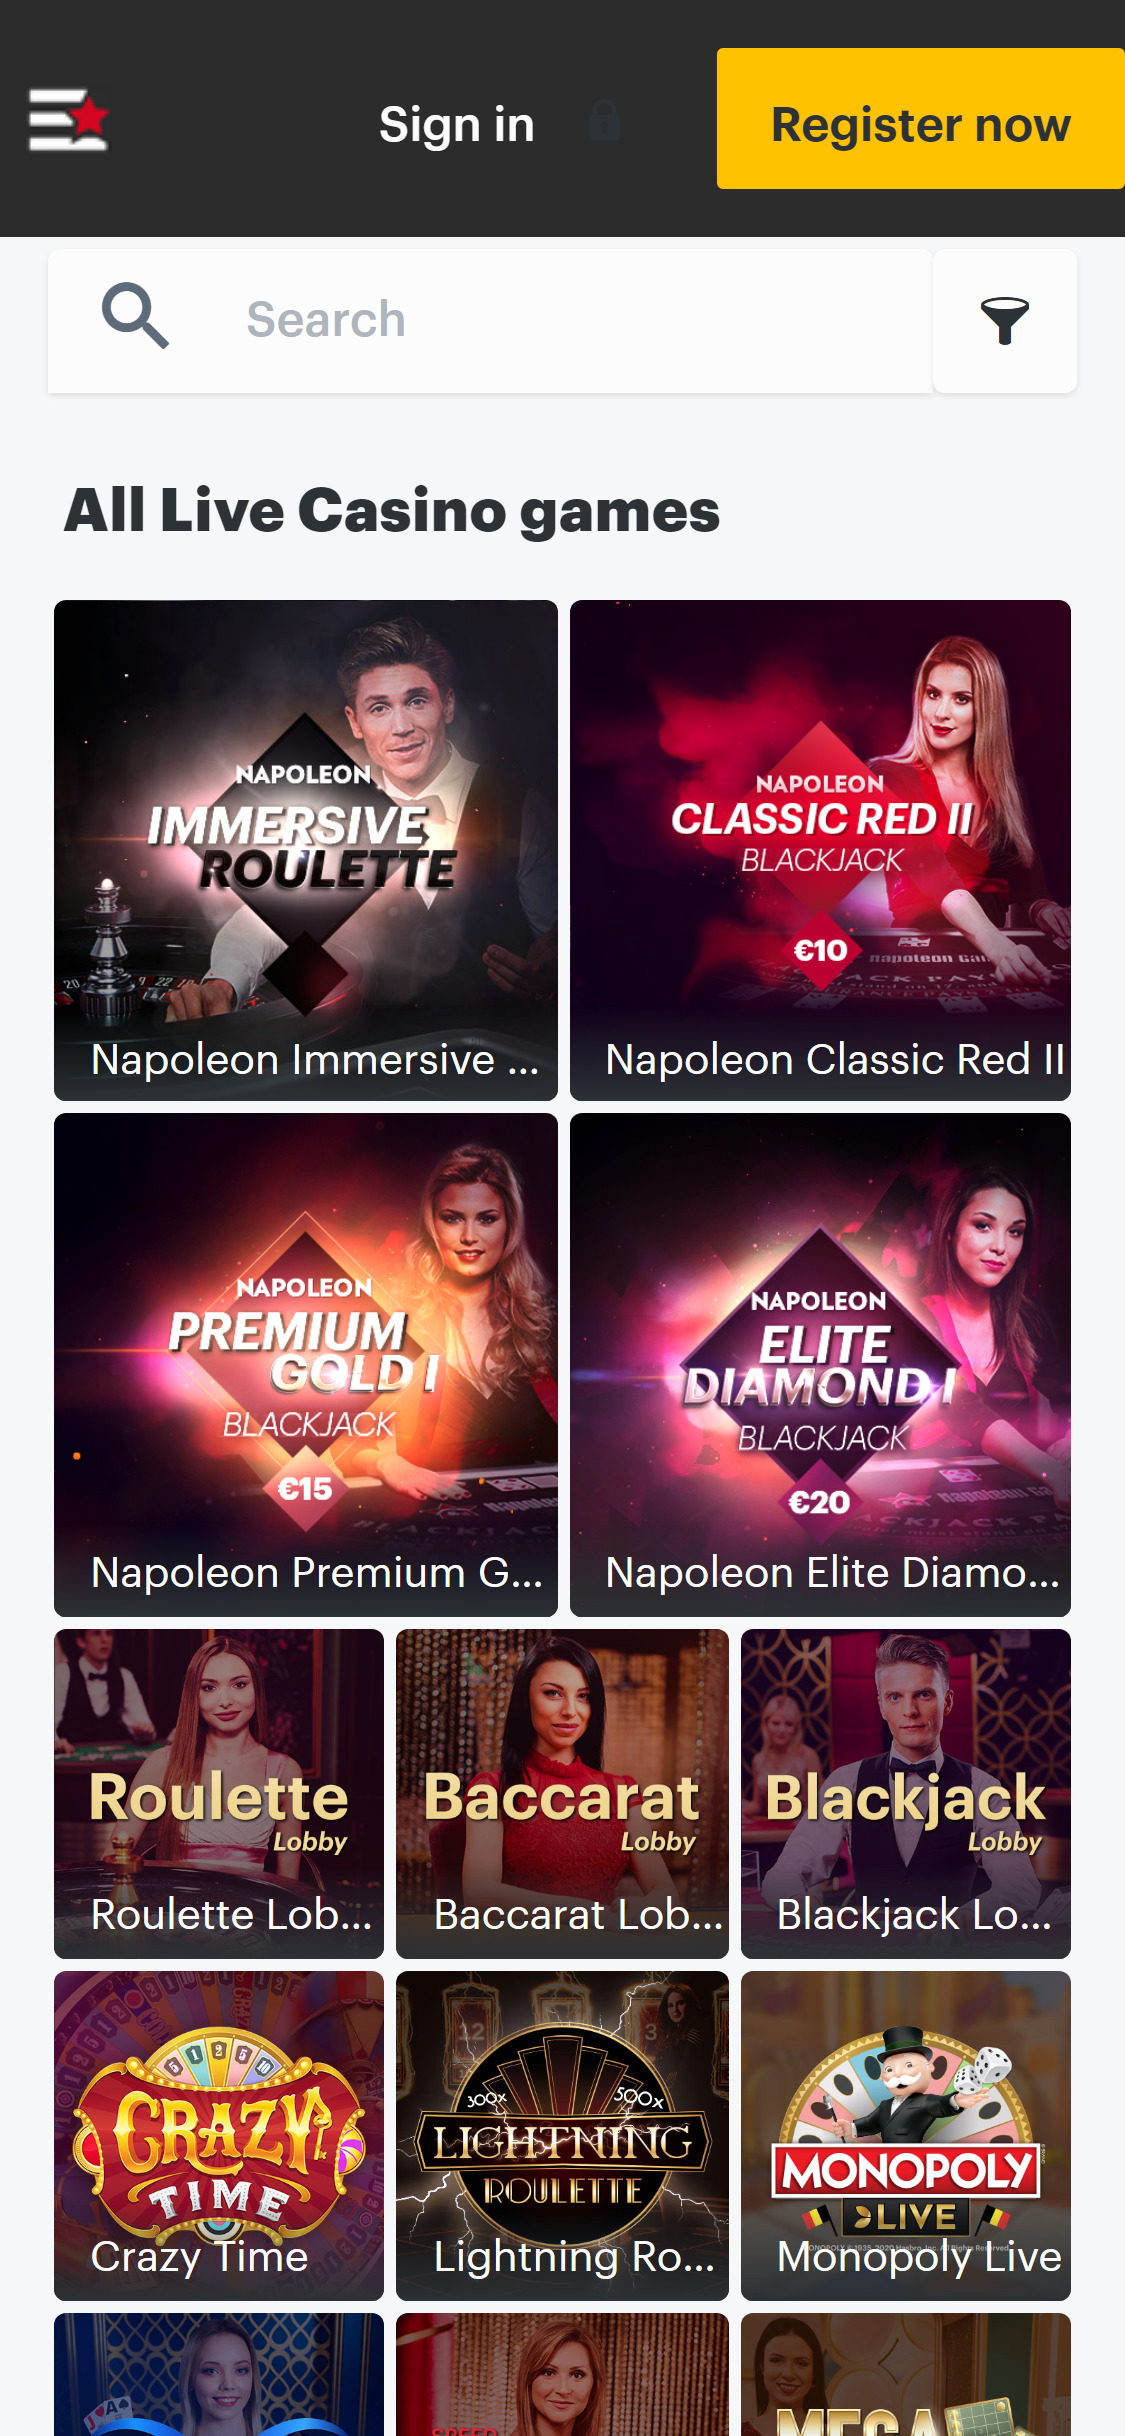 Napoleon Games Mobile Live Dealer Games Review